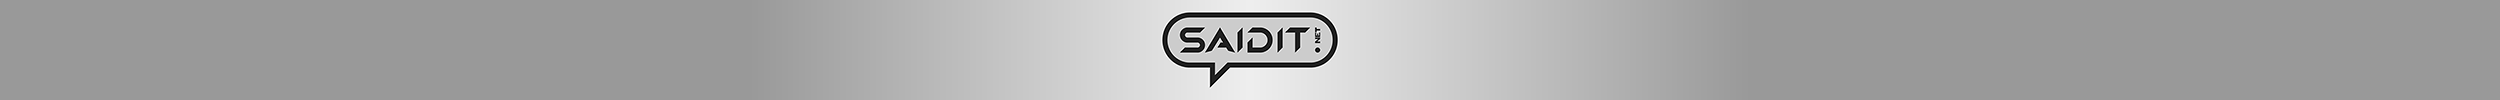 Image Saidit-2019-Centered-Grade-Day-Logo-2500x100